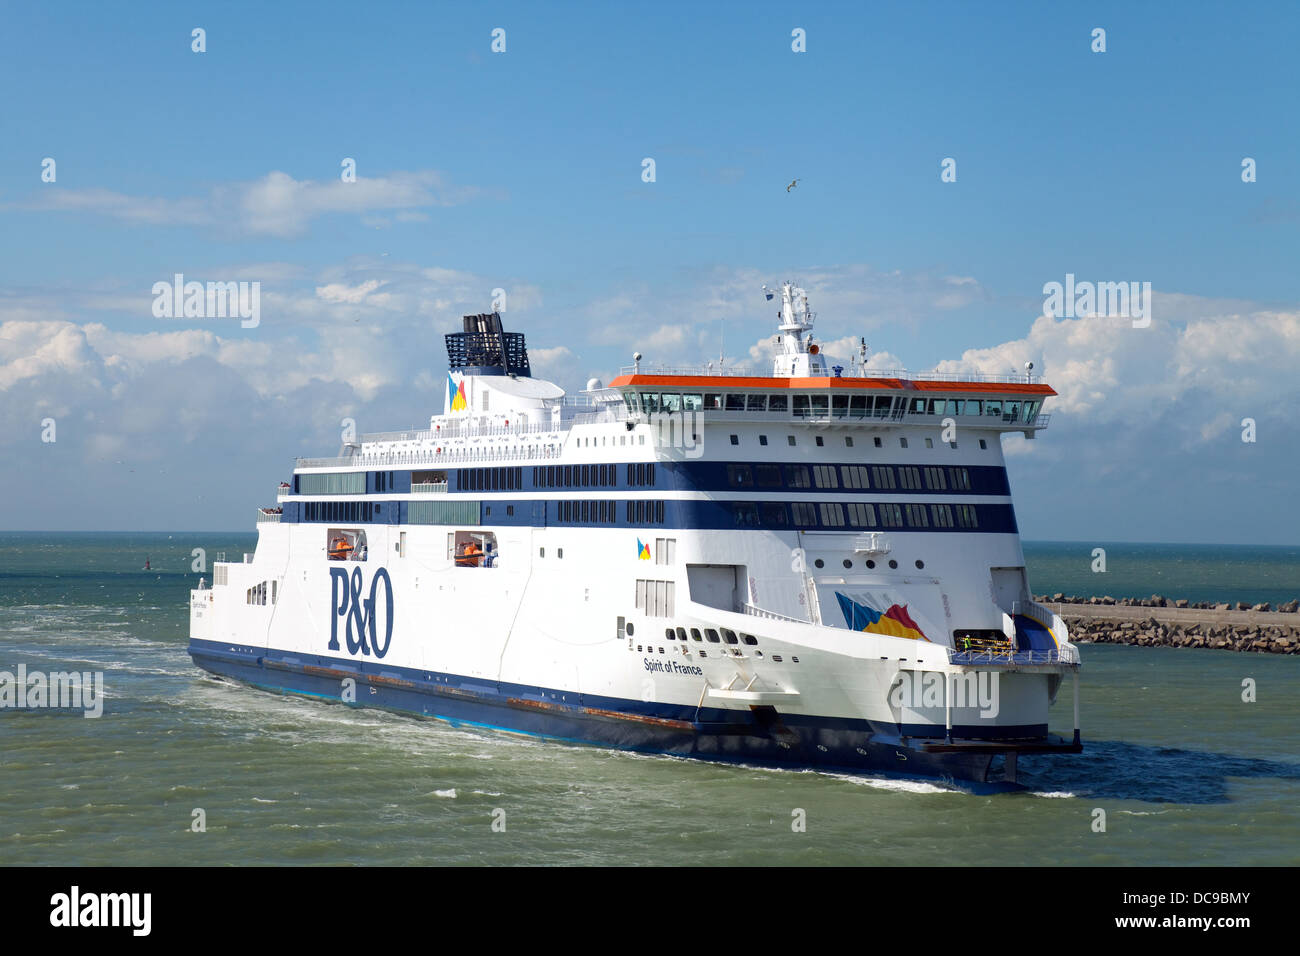 'L'esprit de France' P&O car-ferry traverse la Manche Banque D'Images